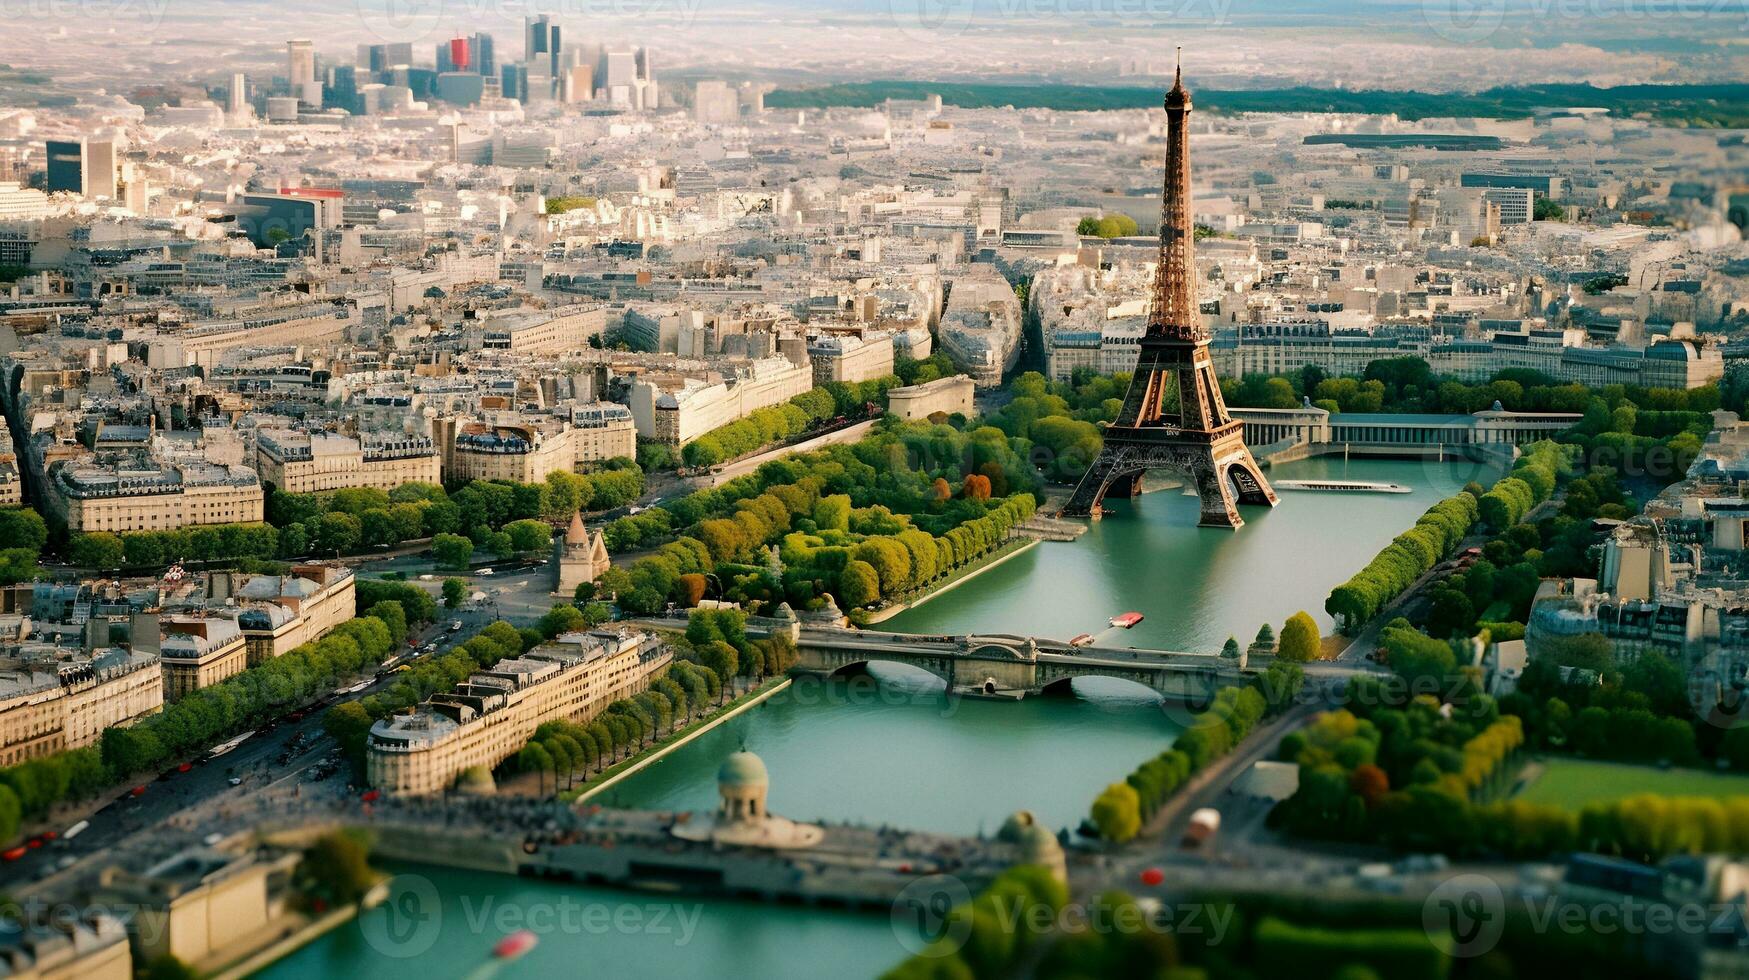 ai gegenereerd perfect top visie miniatuur Parijs Aan stroomkring bord foto